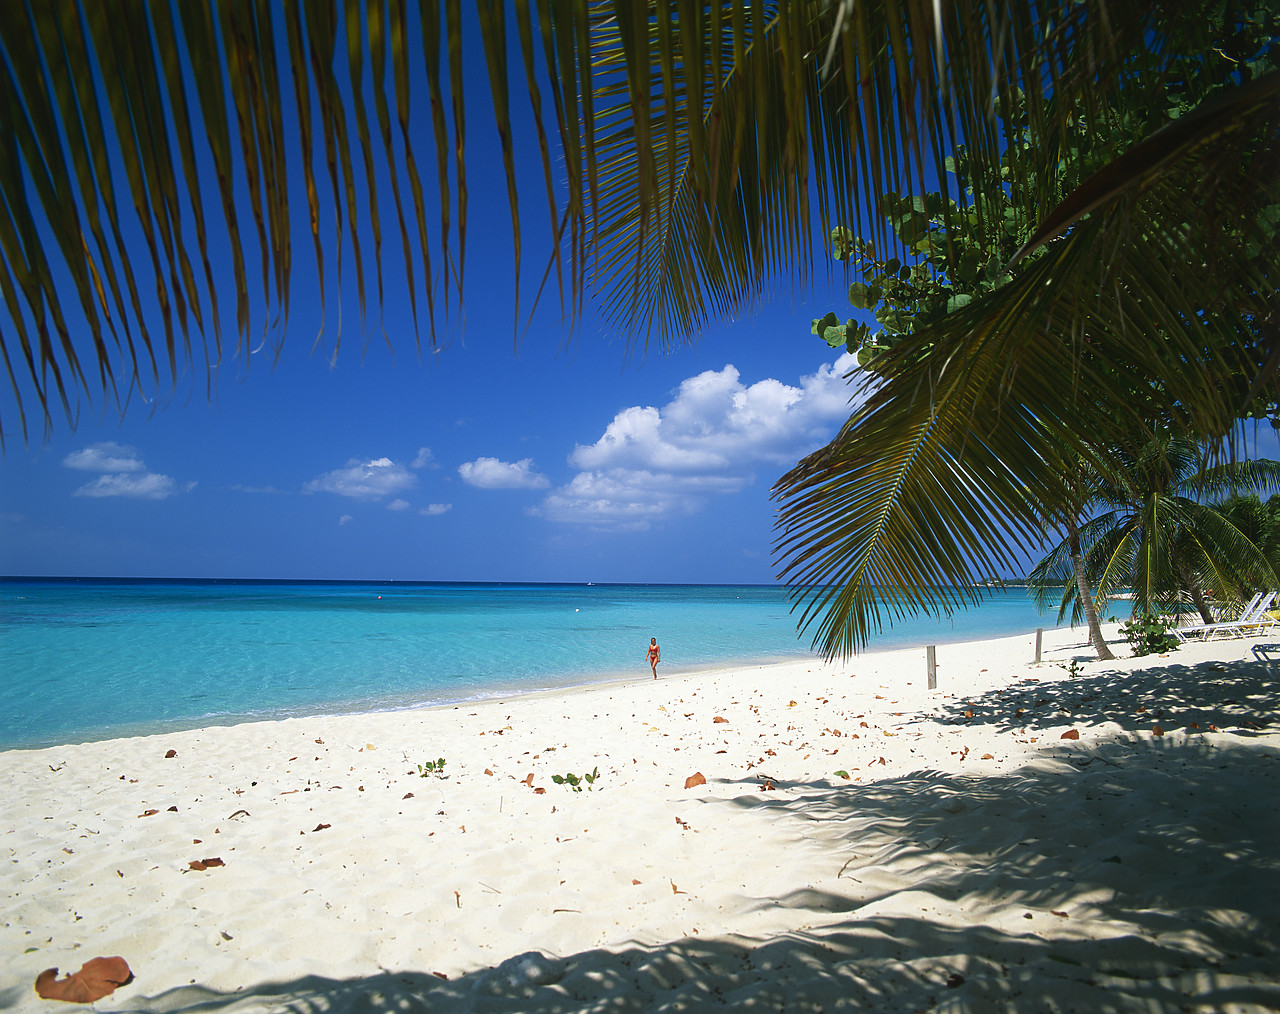 #990536-1 - Lone Person on Beach, Grand Cayman, Cayman Islands